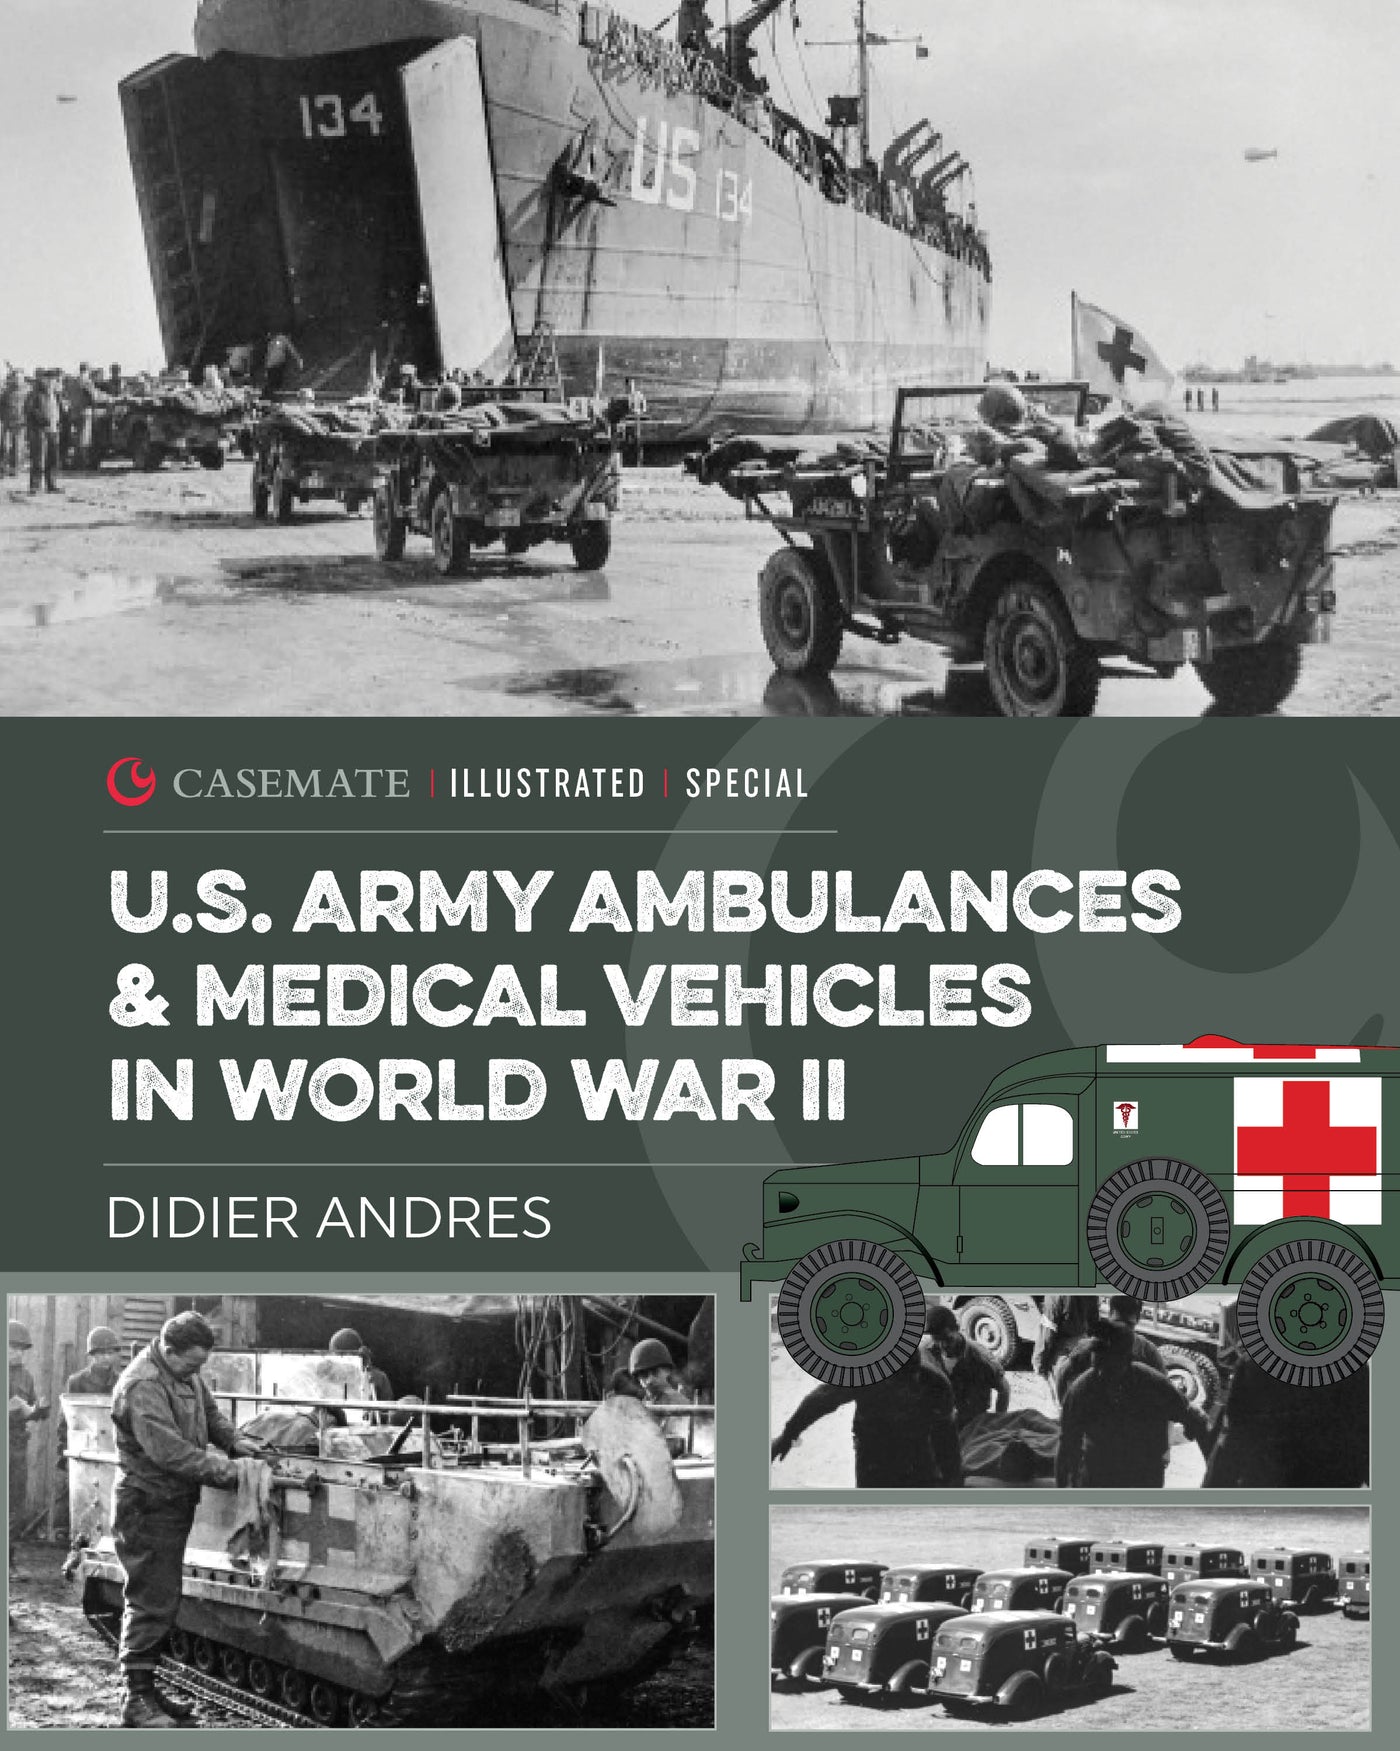 U.S. Army Ambulances and Medical Vehicles in World War II